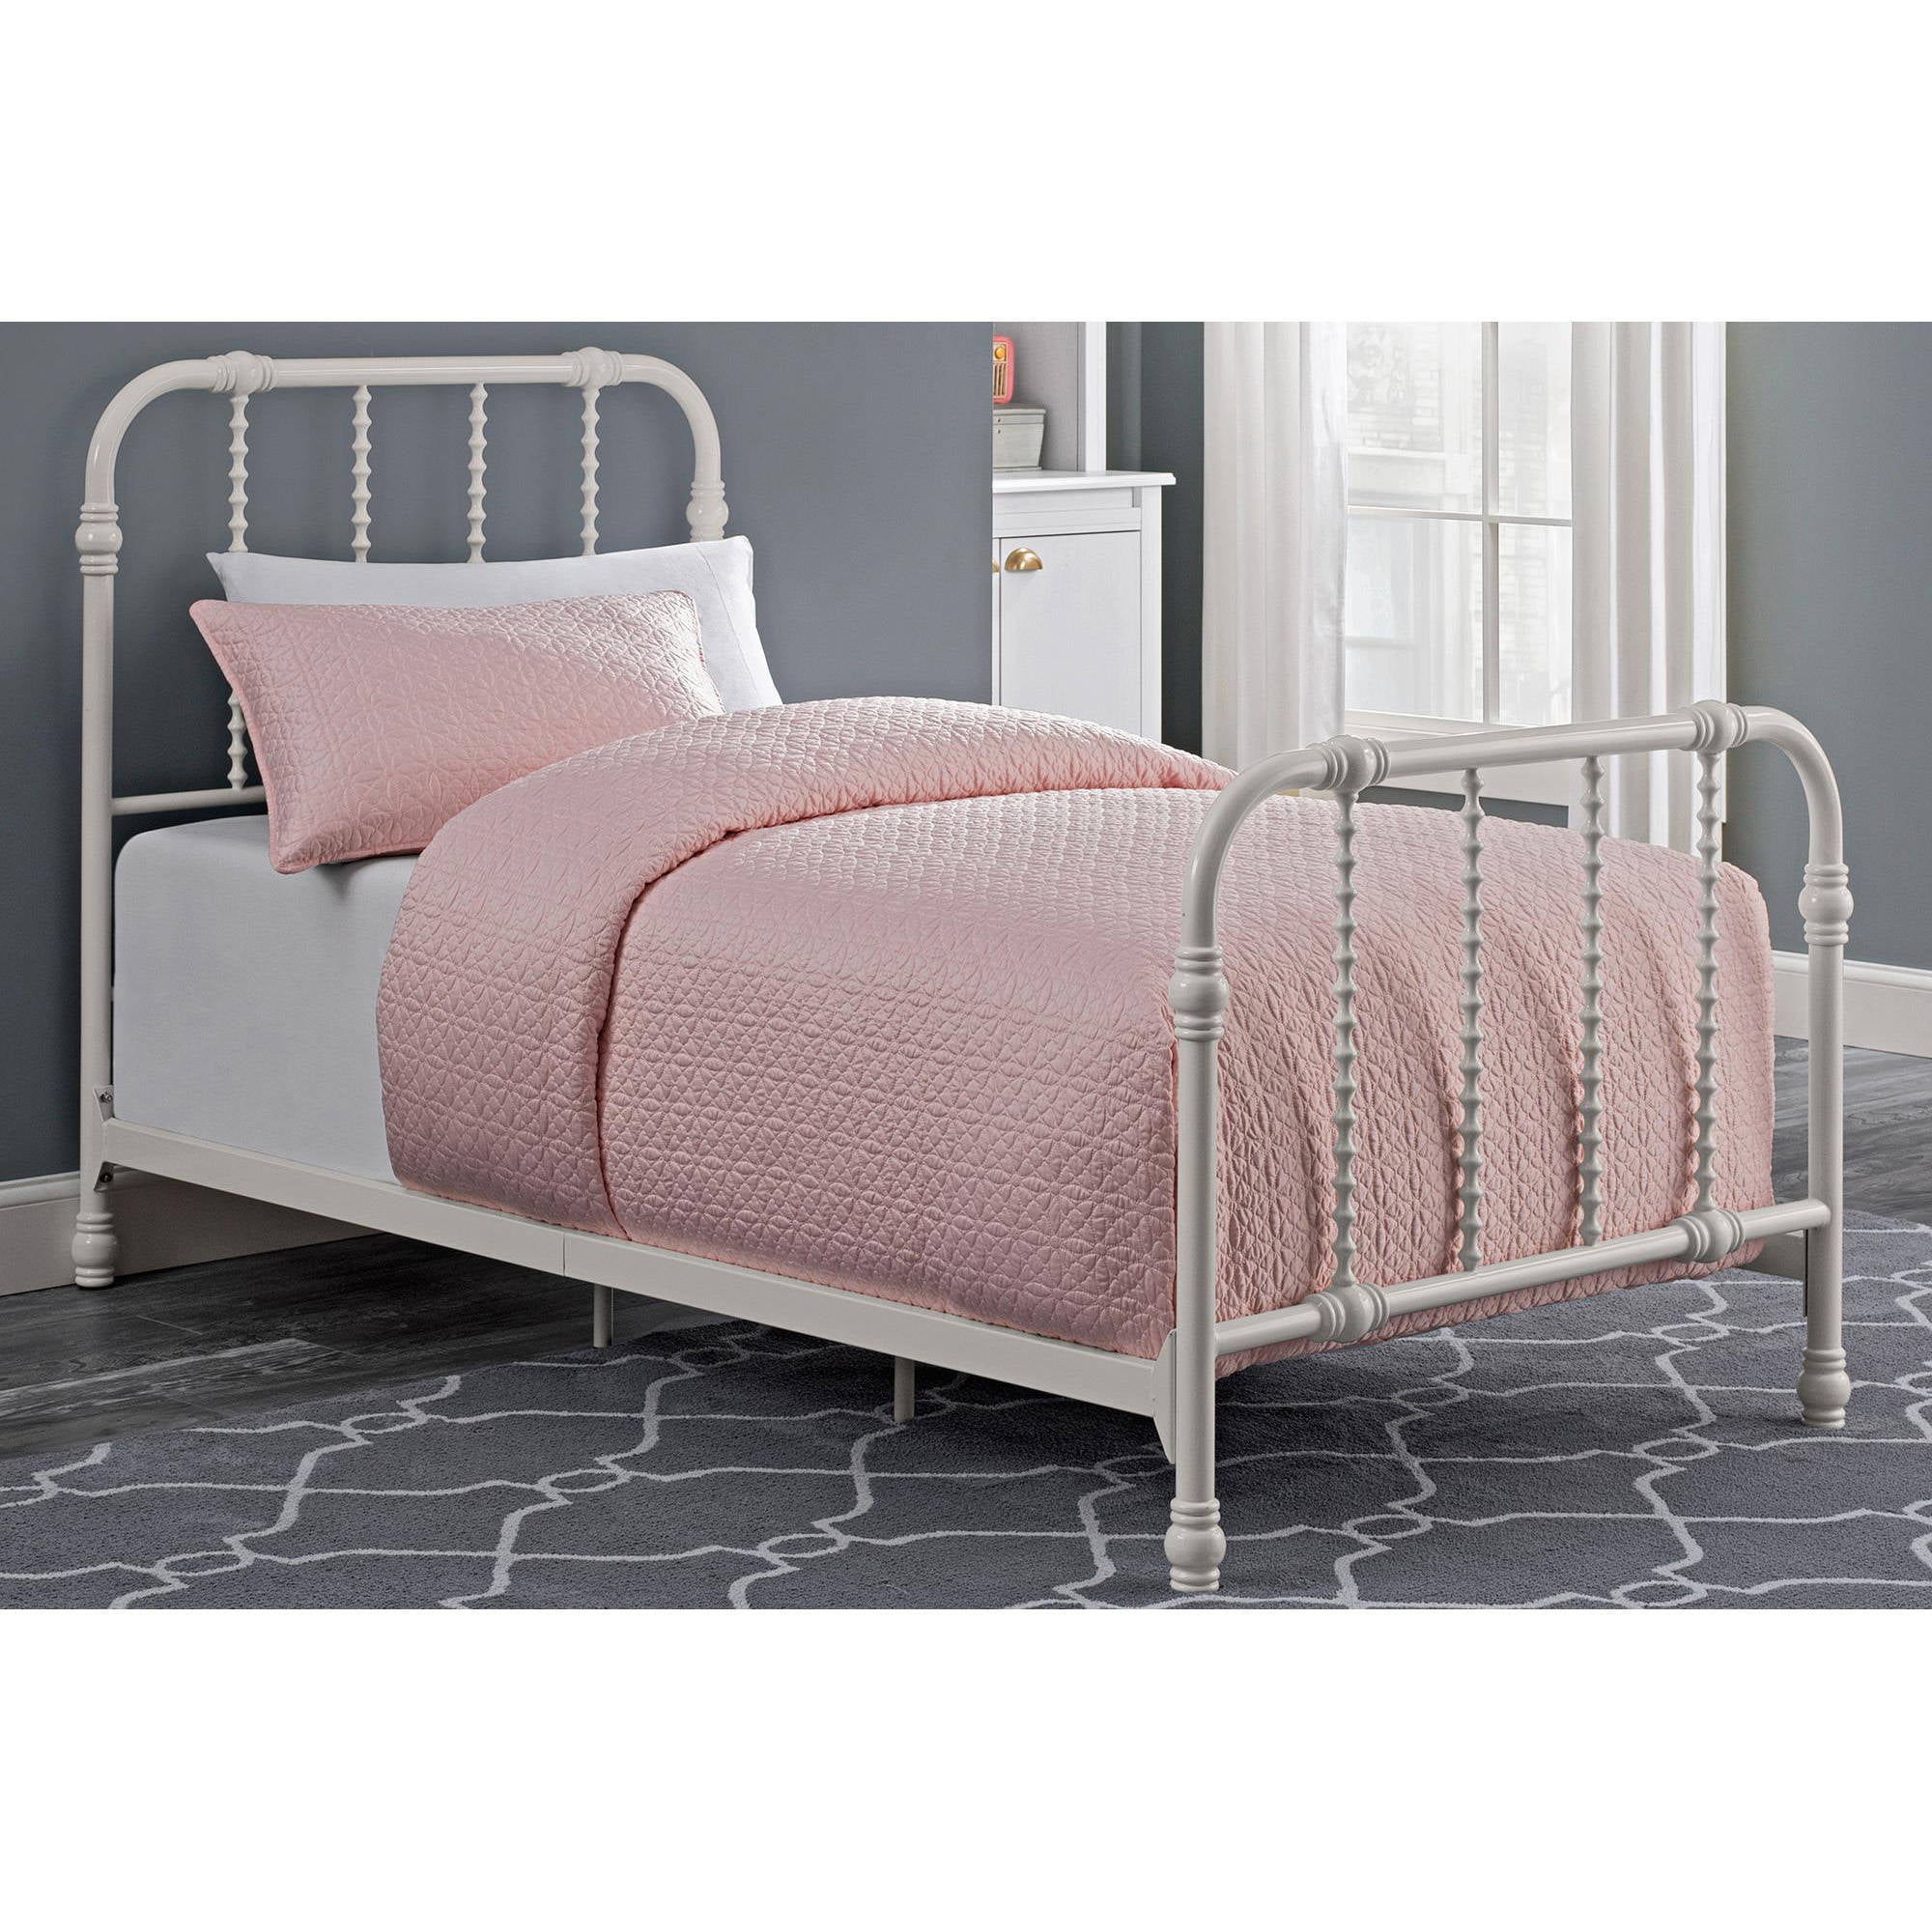 Ajh Jenny Lind Twin Bed Target, King Size Metal Bed Frame Target